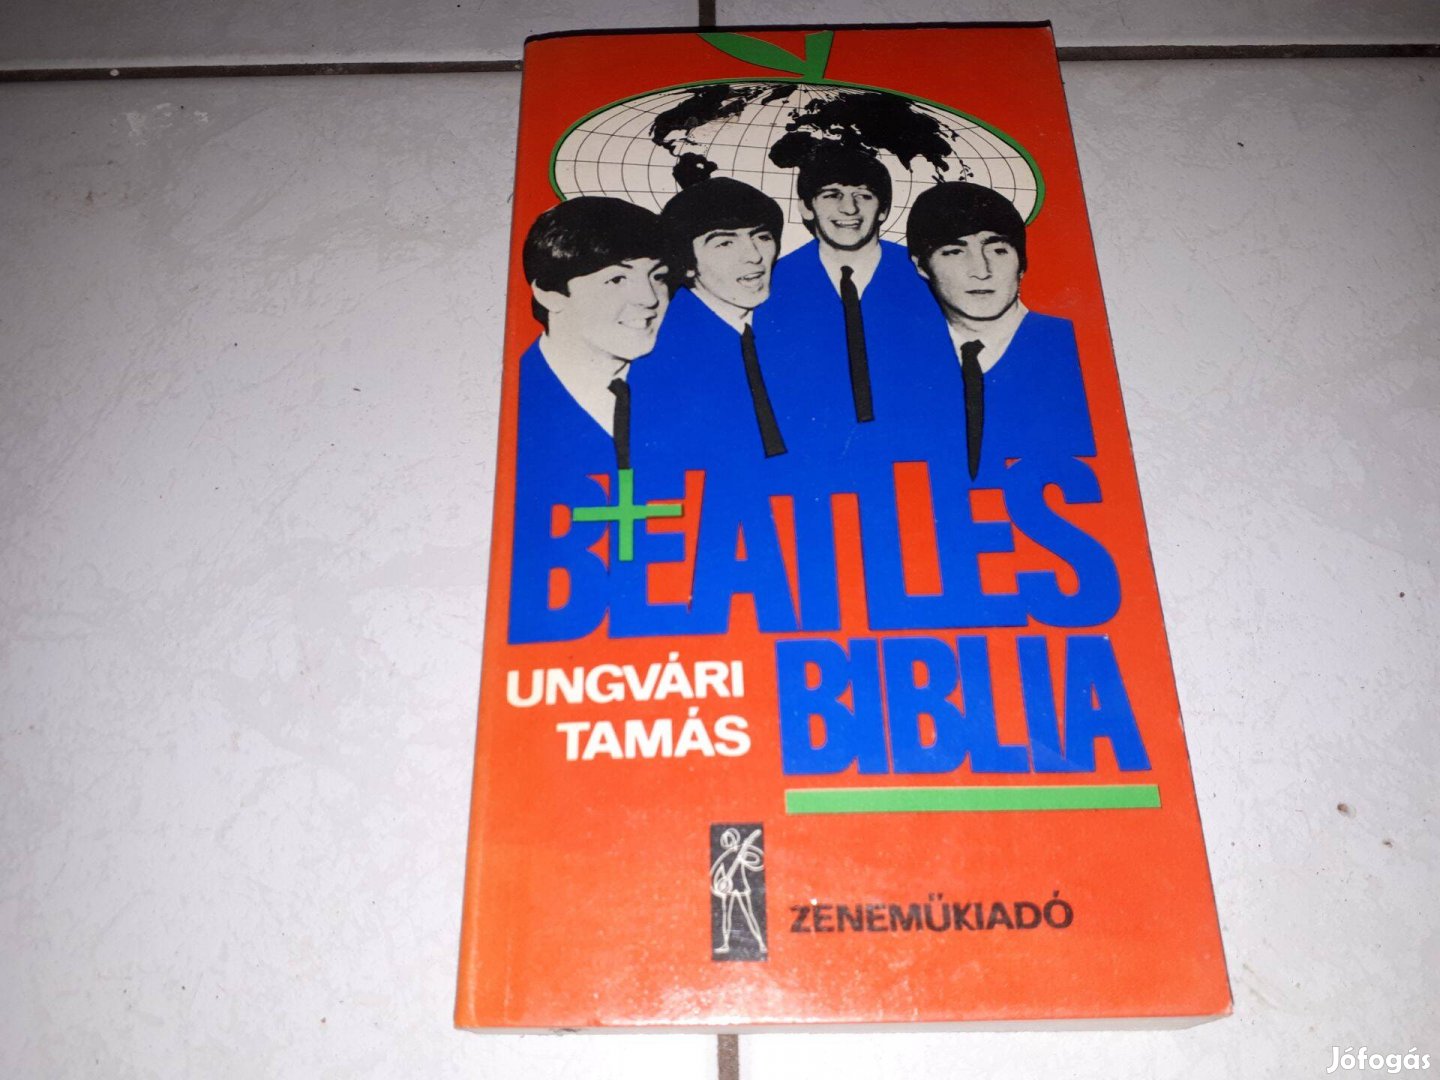 Ungvári Tamás - Beatles biblia